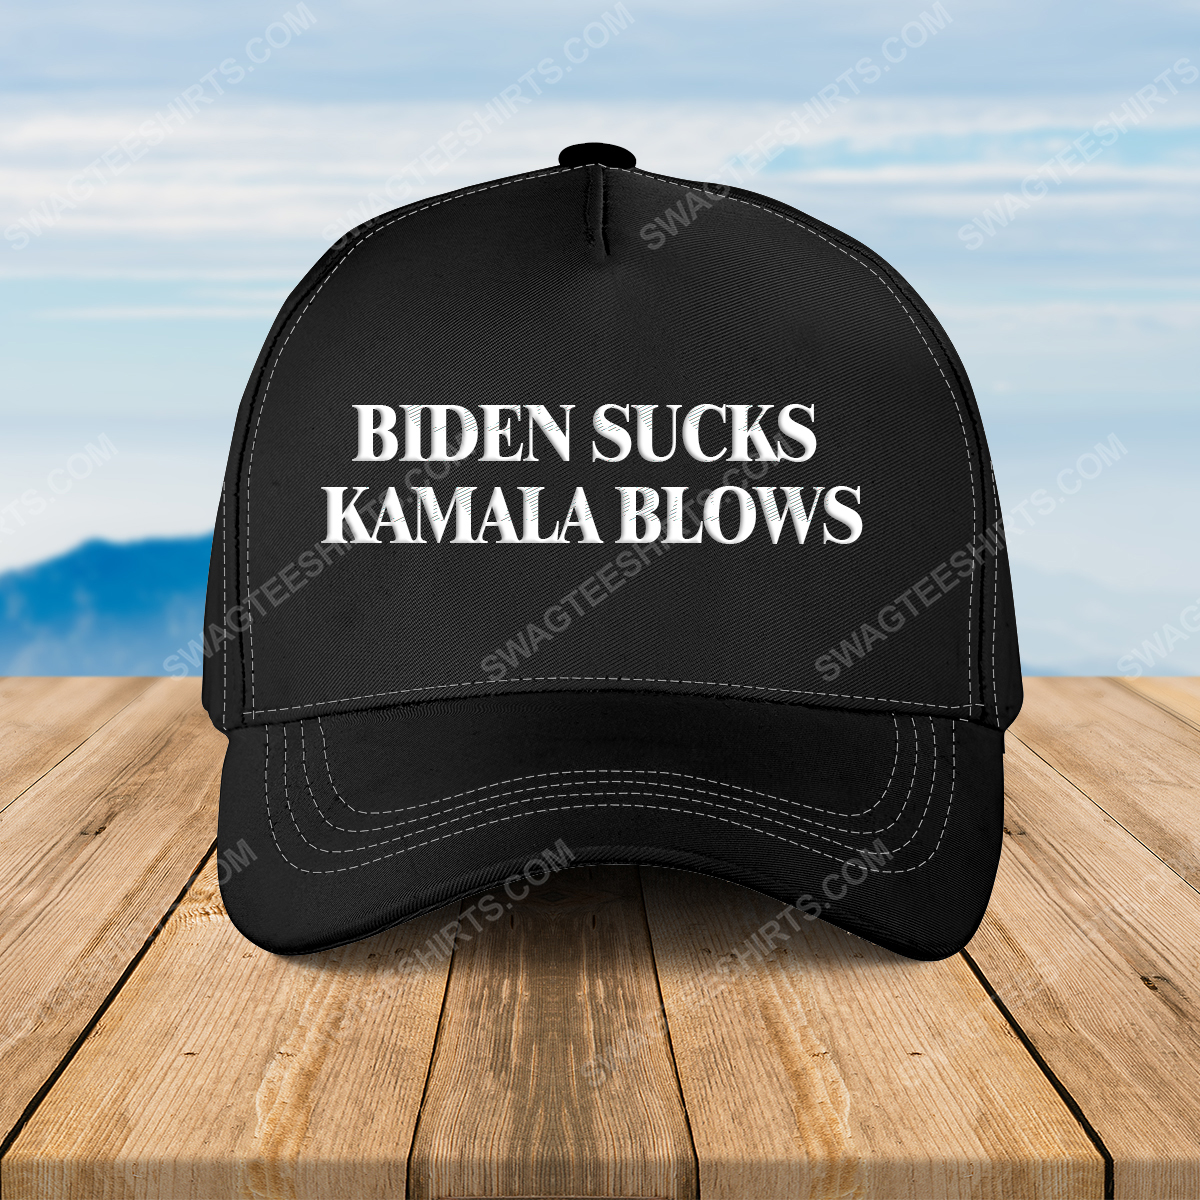 Biden sucks kamala blows full print classic hat 1 - Copy